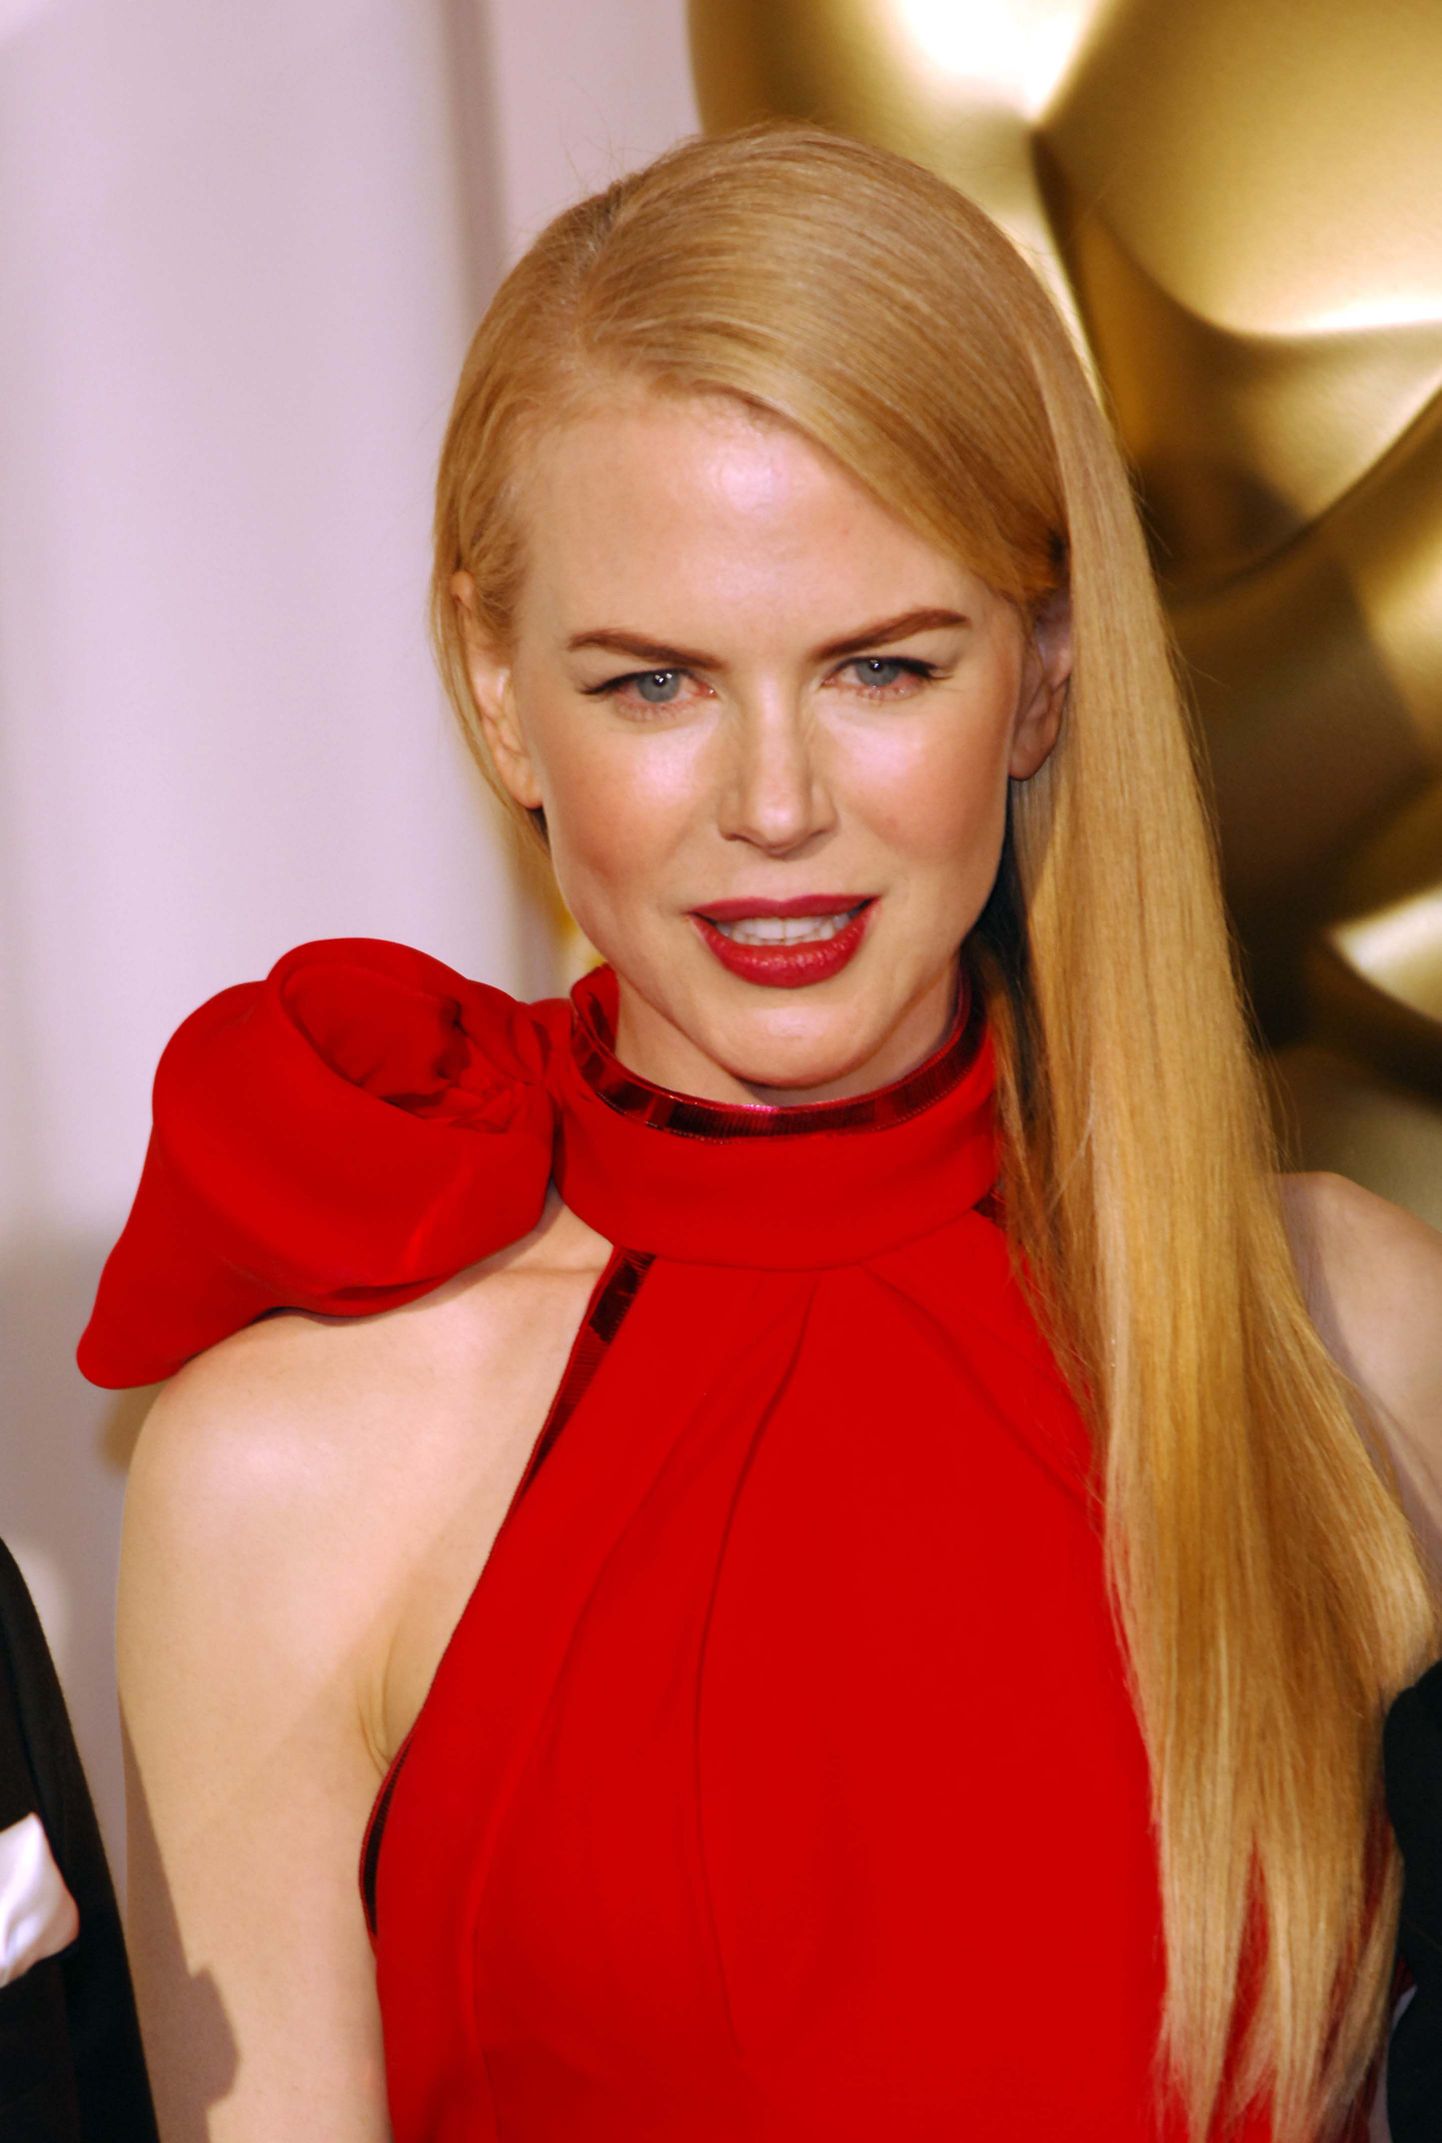 Nicole Kidman  at  the 79th Annual Academy Awards Presentation at the Kodak Theatre in Holywood LA
Date:  
Ref:  
COMPULSORY CREDIT: David Wimsett/Starstock/Photoshot